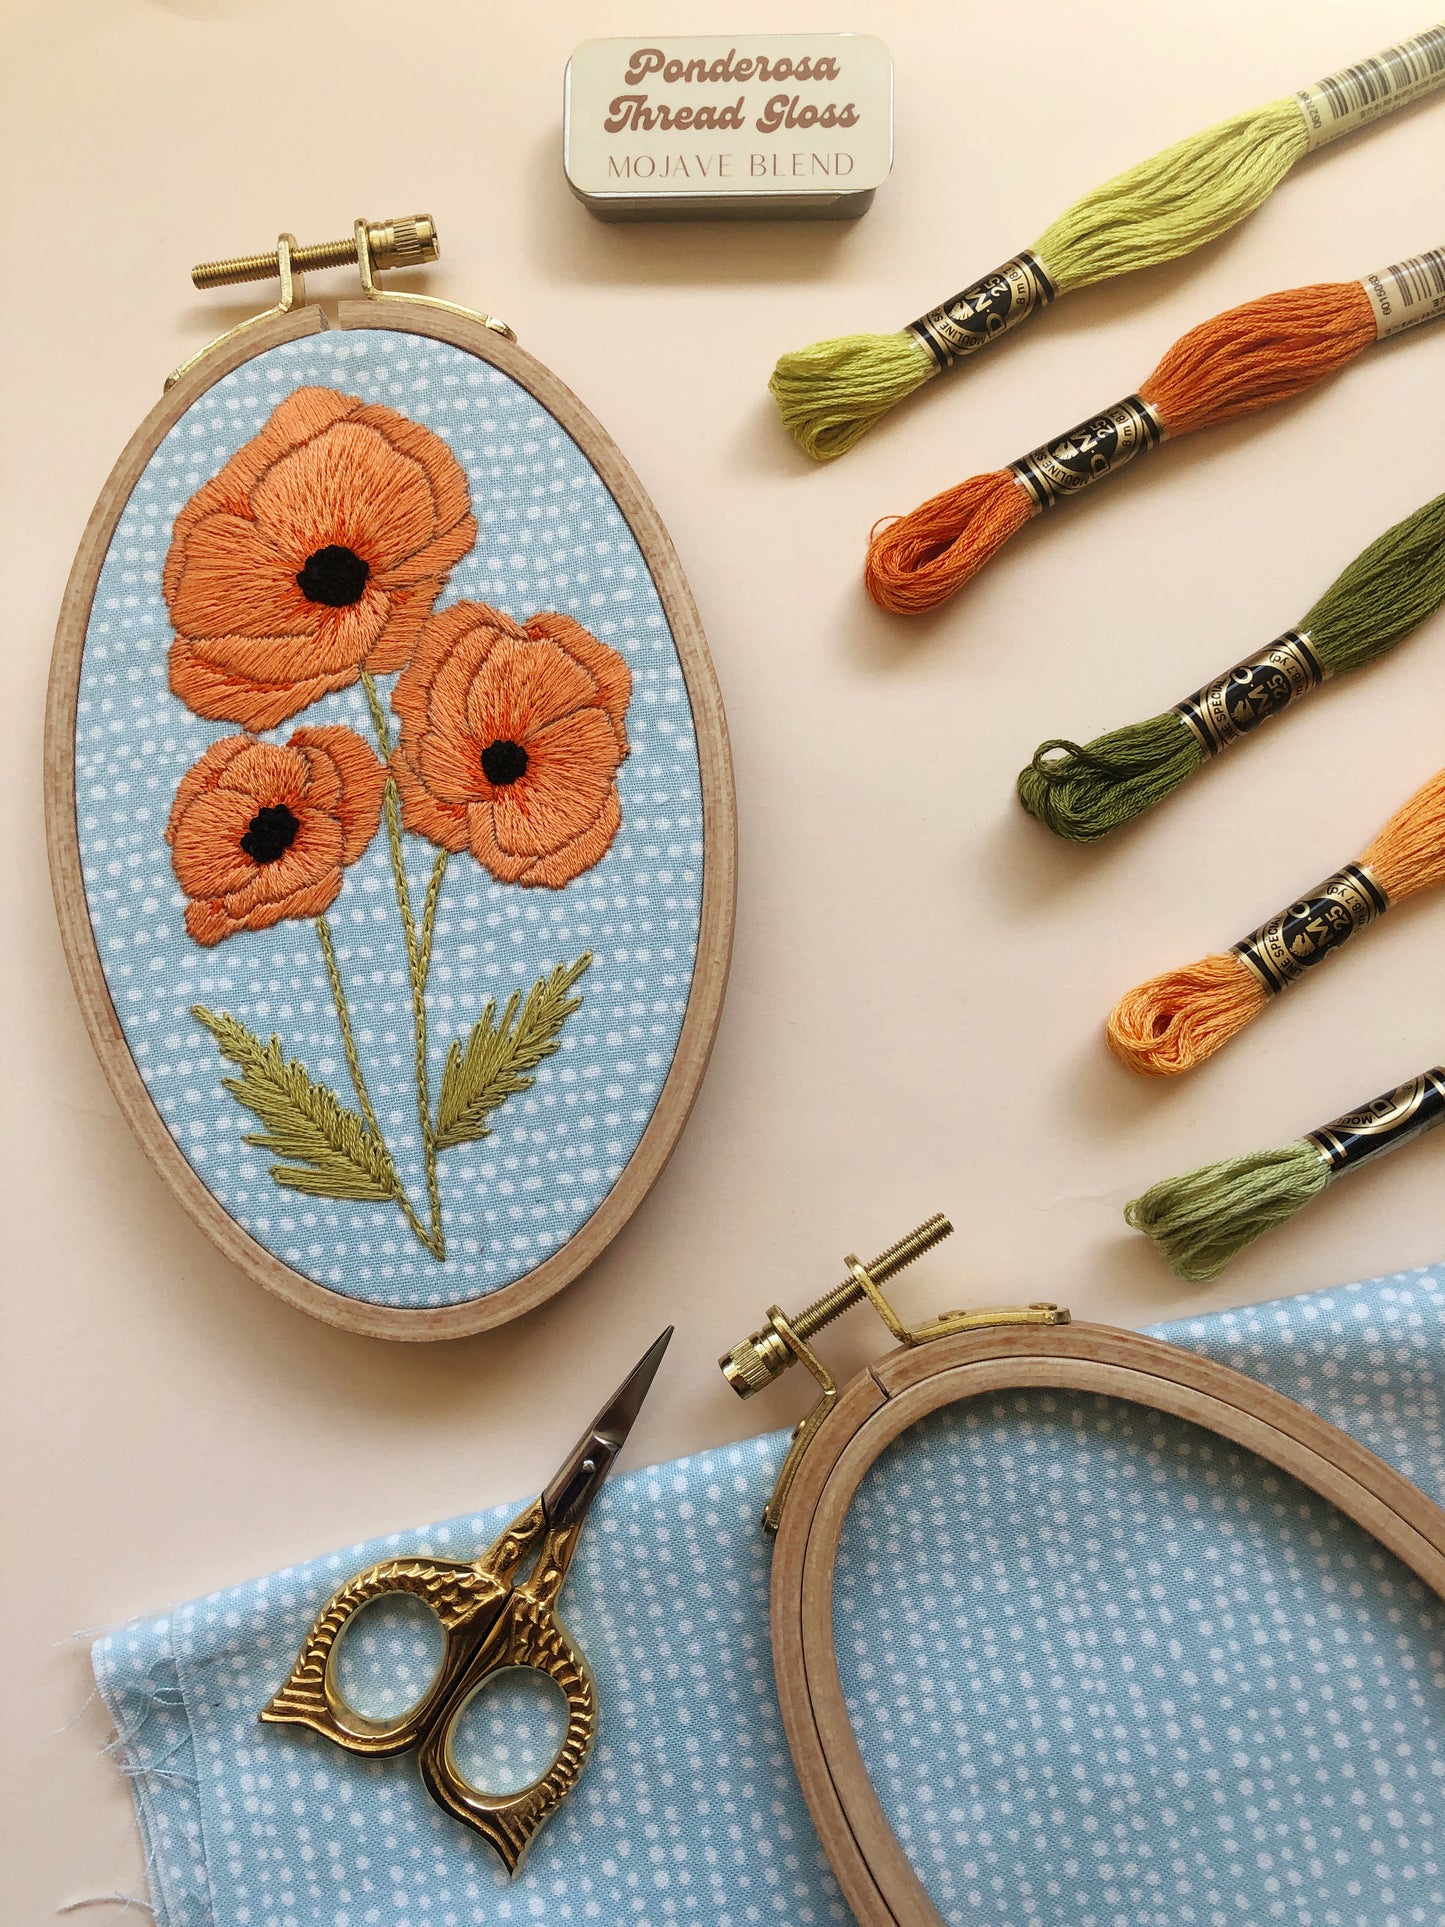 Poppies - Intermediate Hand Embroidery DIY Craft Kit